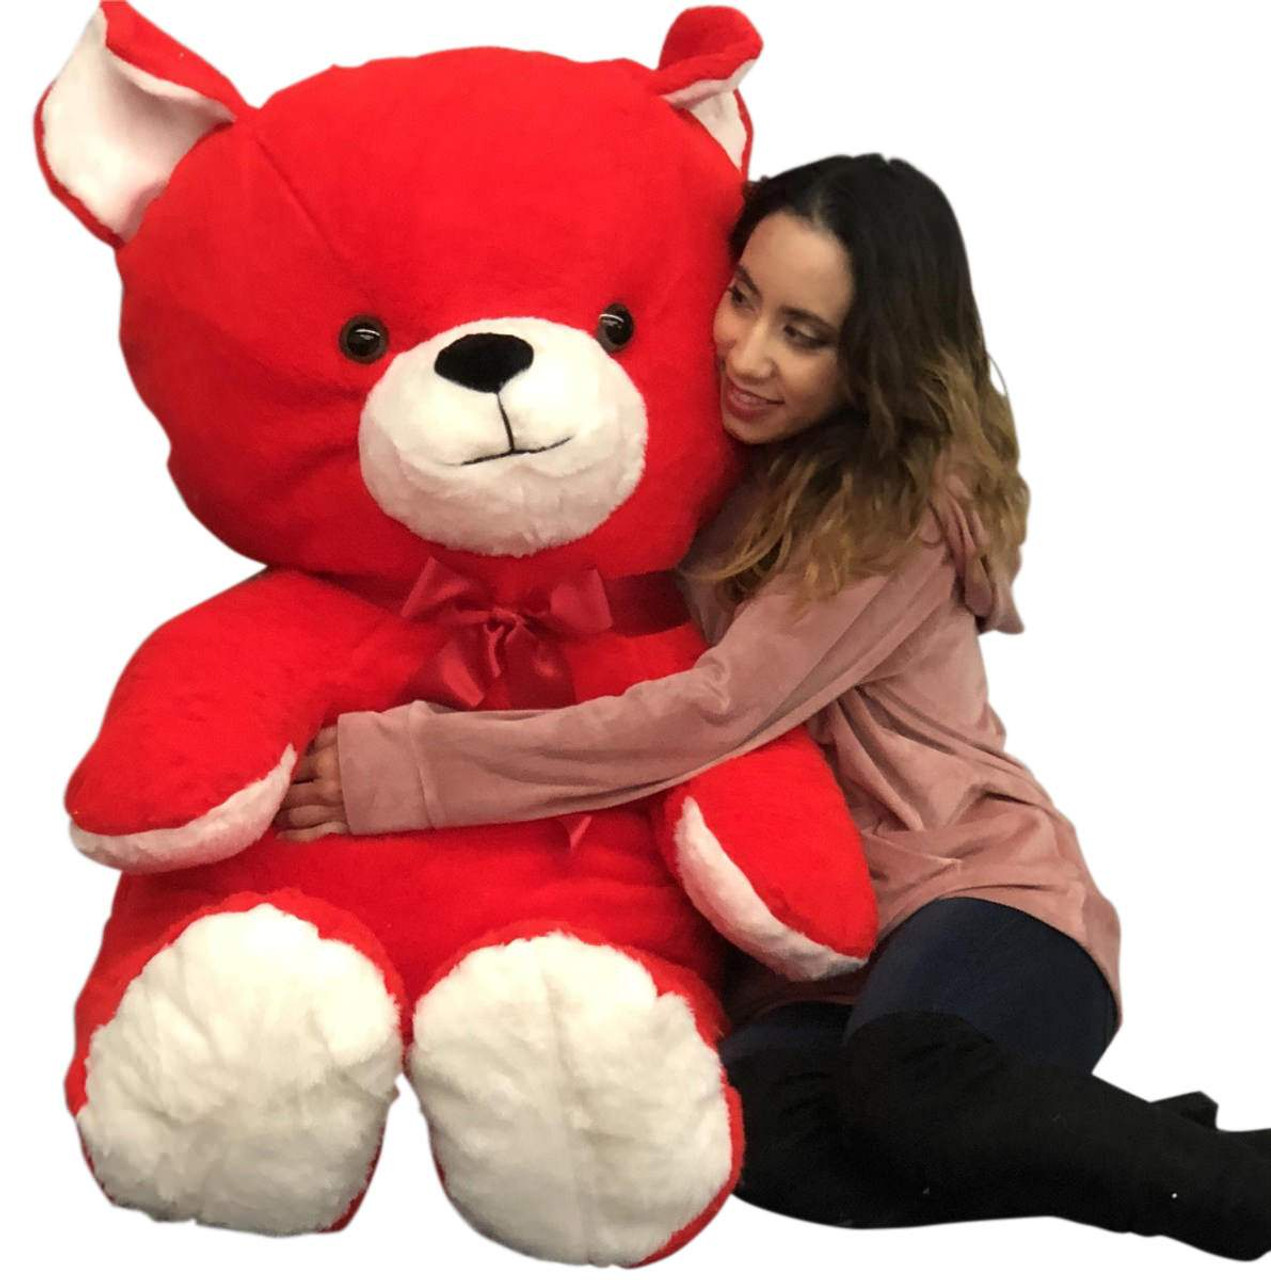 giant red teddy bear